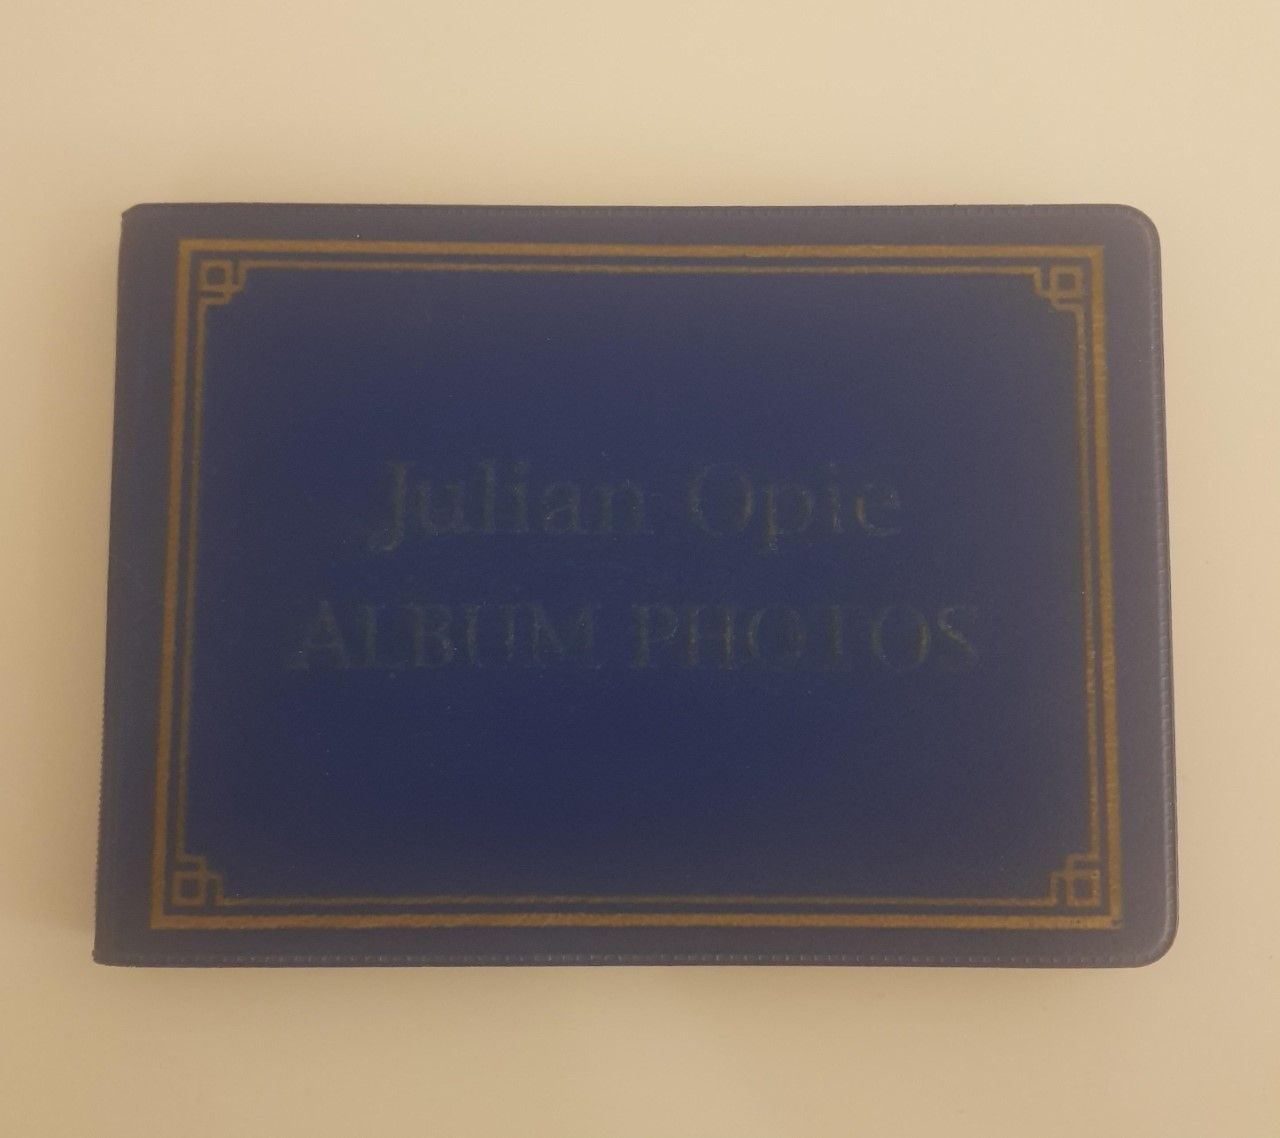 OPIE JULIAN JULIAN OPIE
London (England) 1958

Julian Opie - Albumfotos
1995

Ge&hellip;